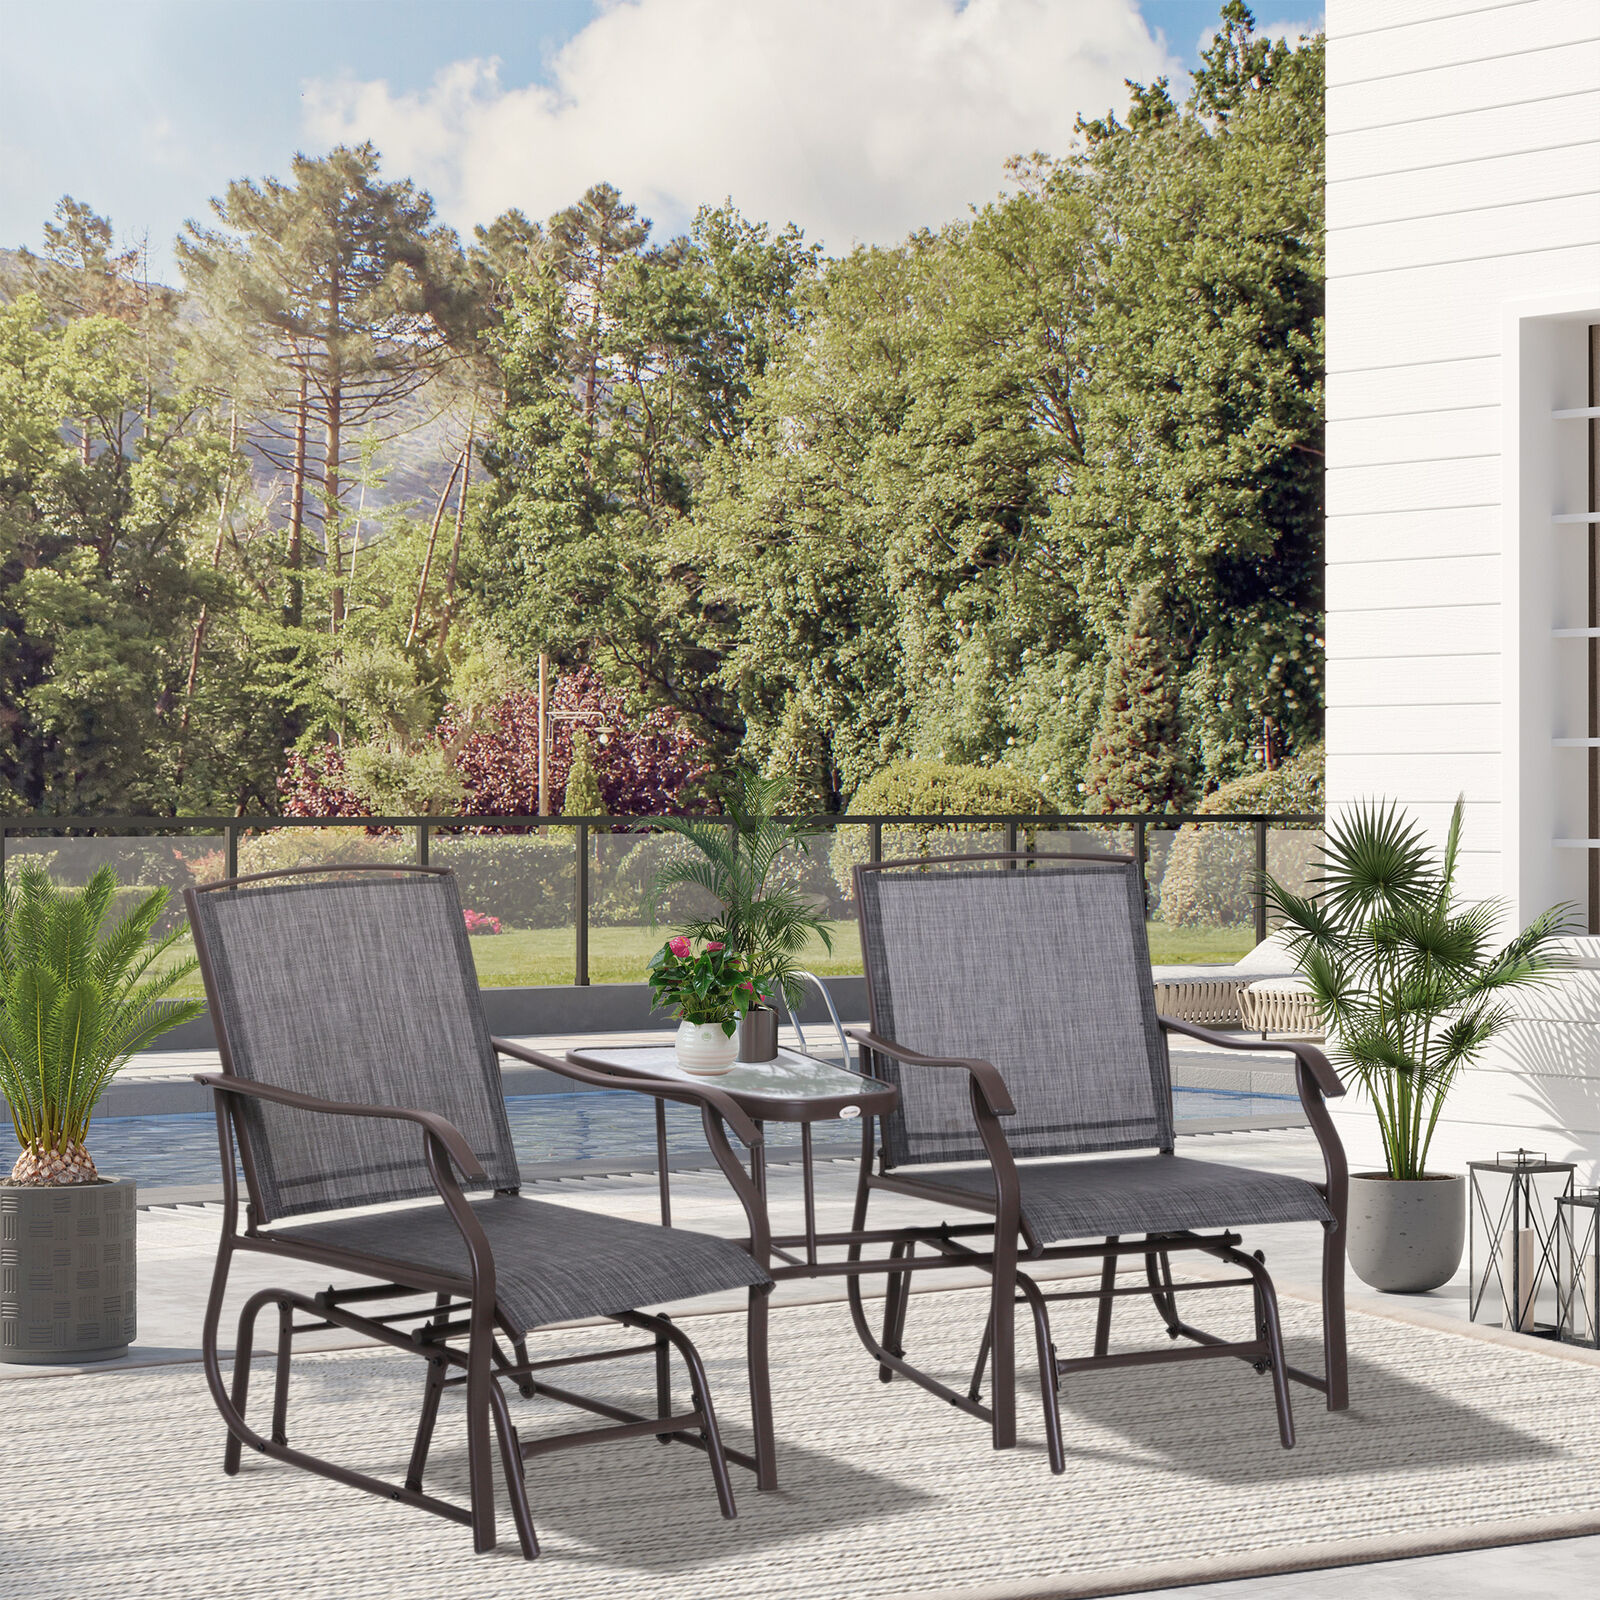 Outdoor Double Patio Rocker Glider Chairs w/Table, Backyard, Garden, Porch Deck